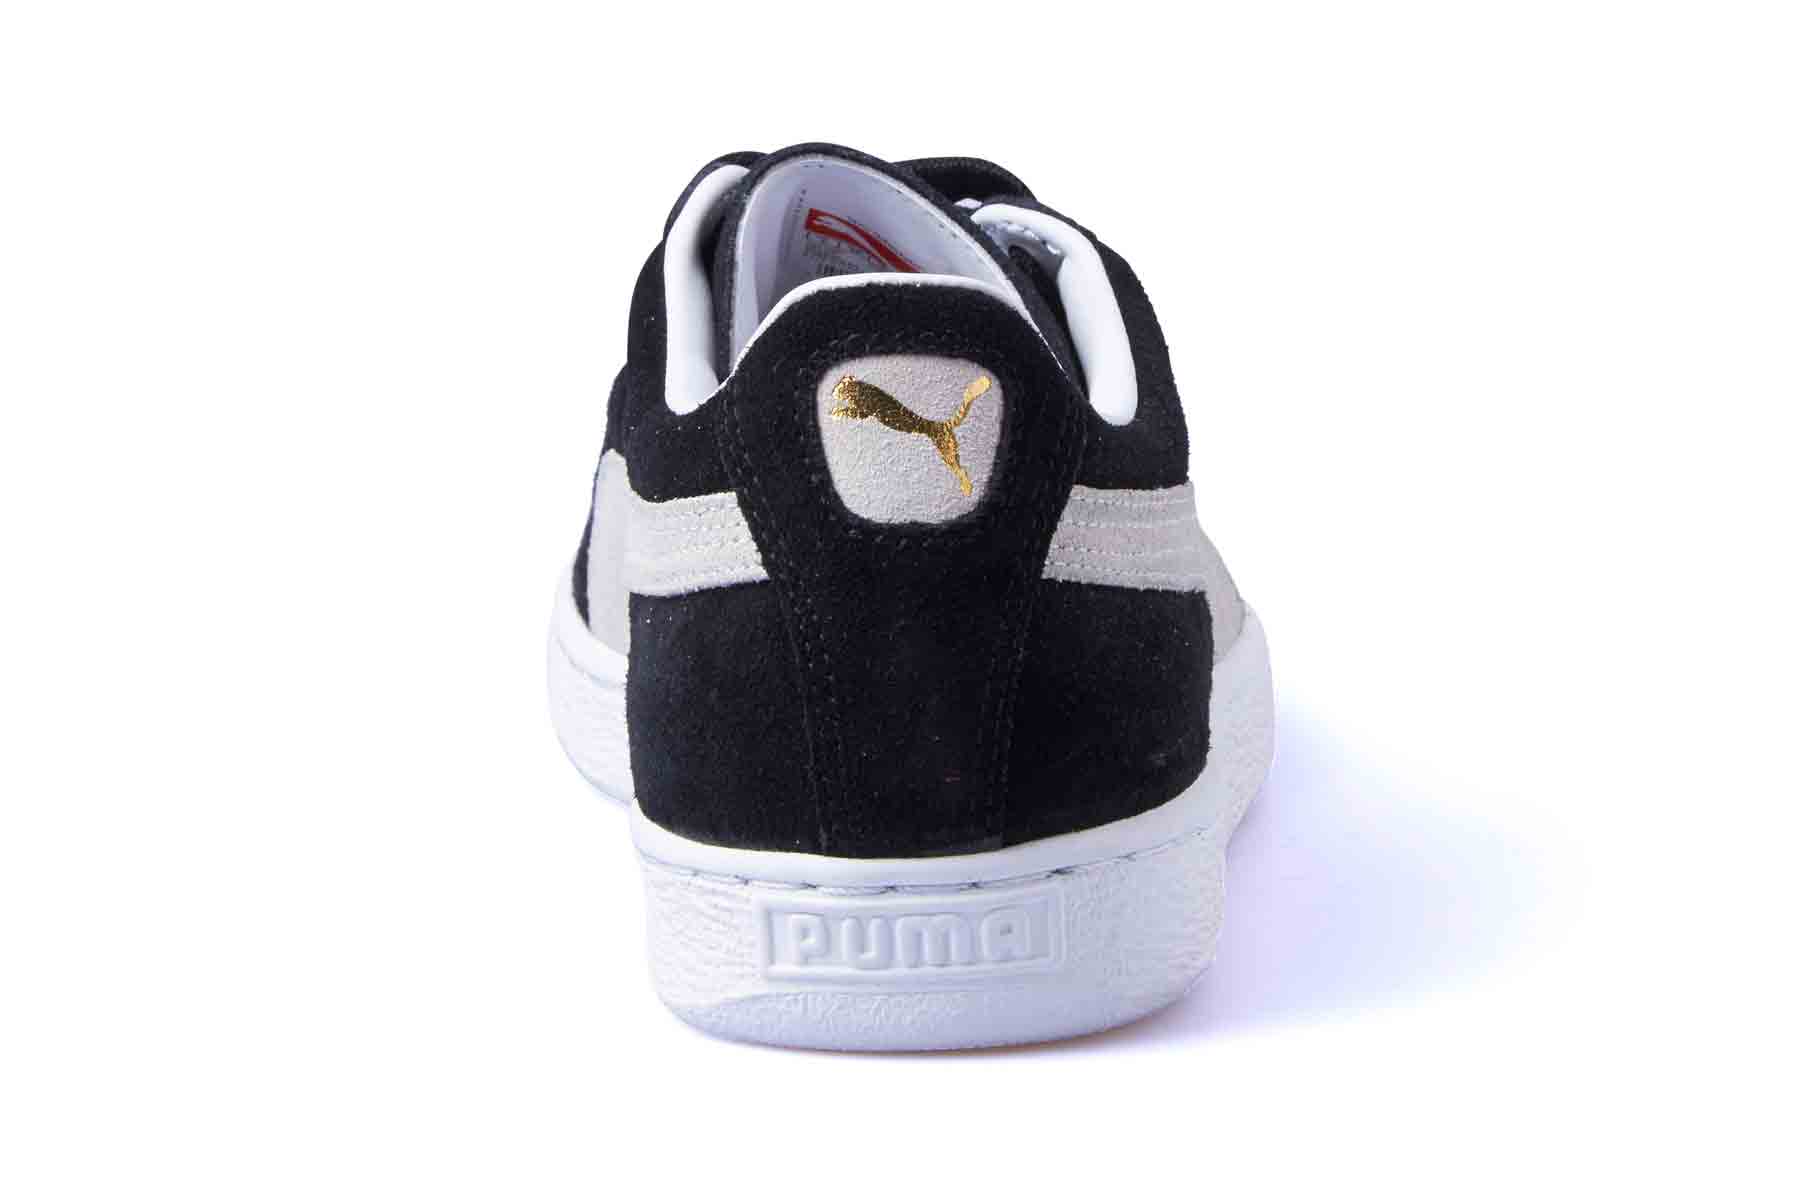 Puma Suede Classic - Black/white